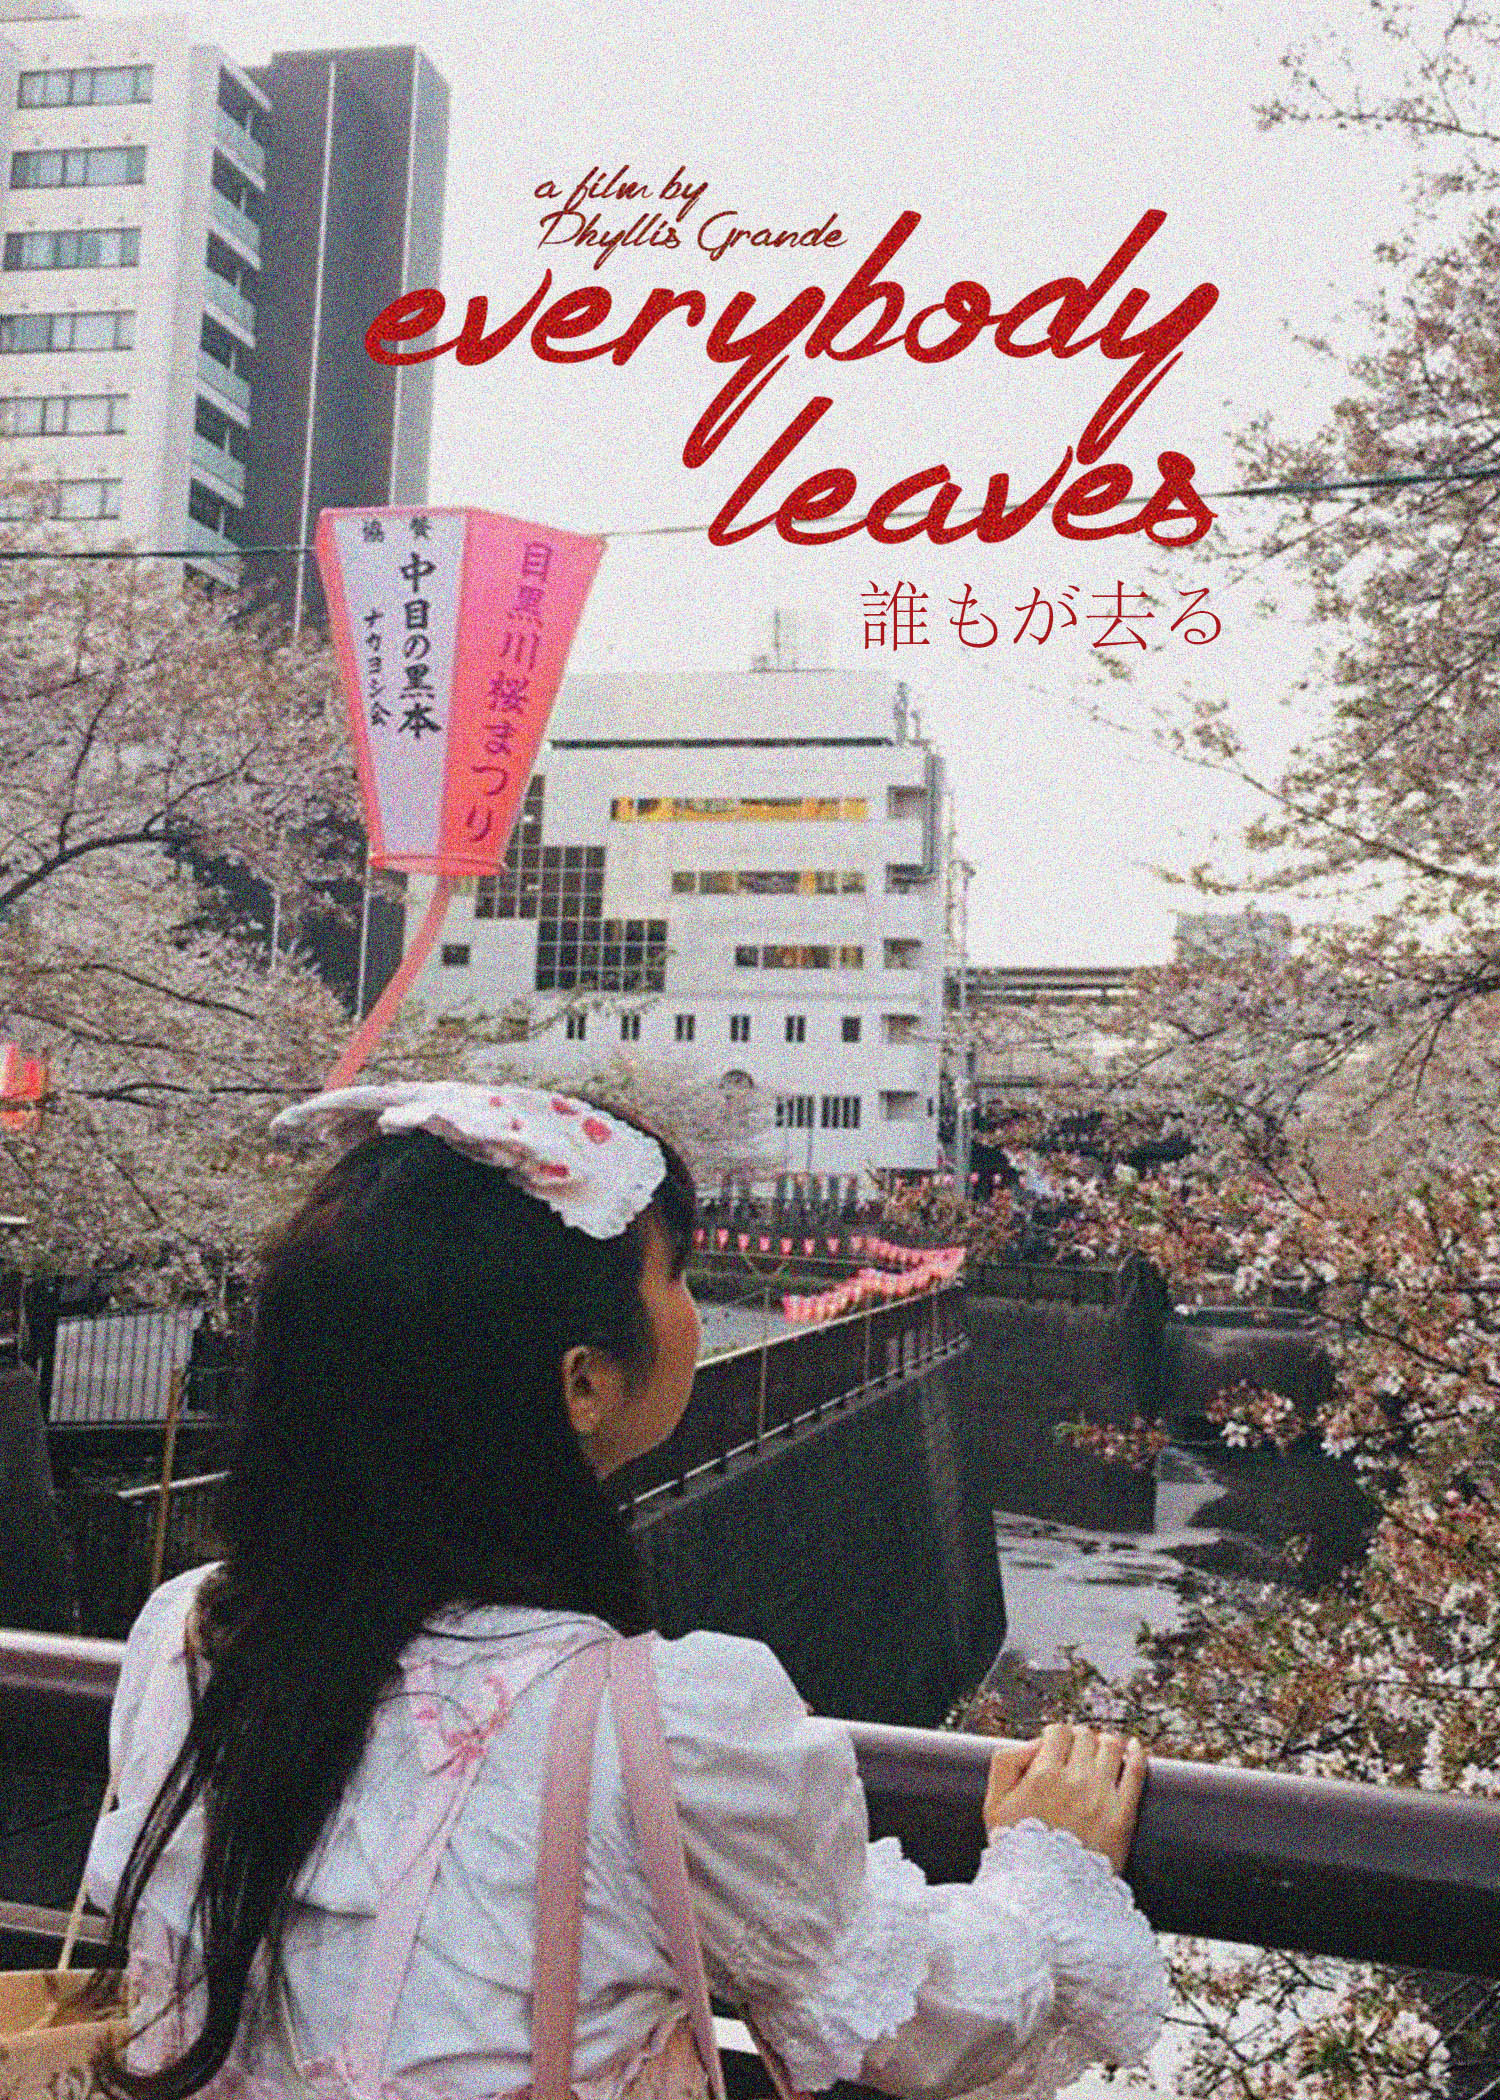 Everybody Leaves